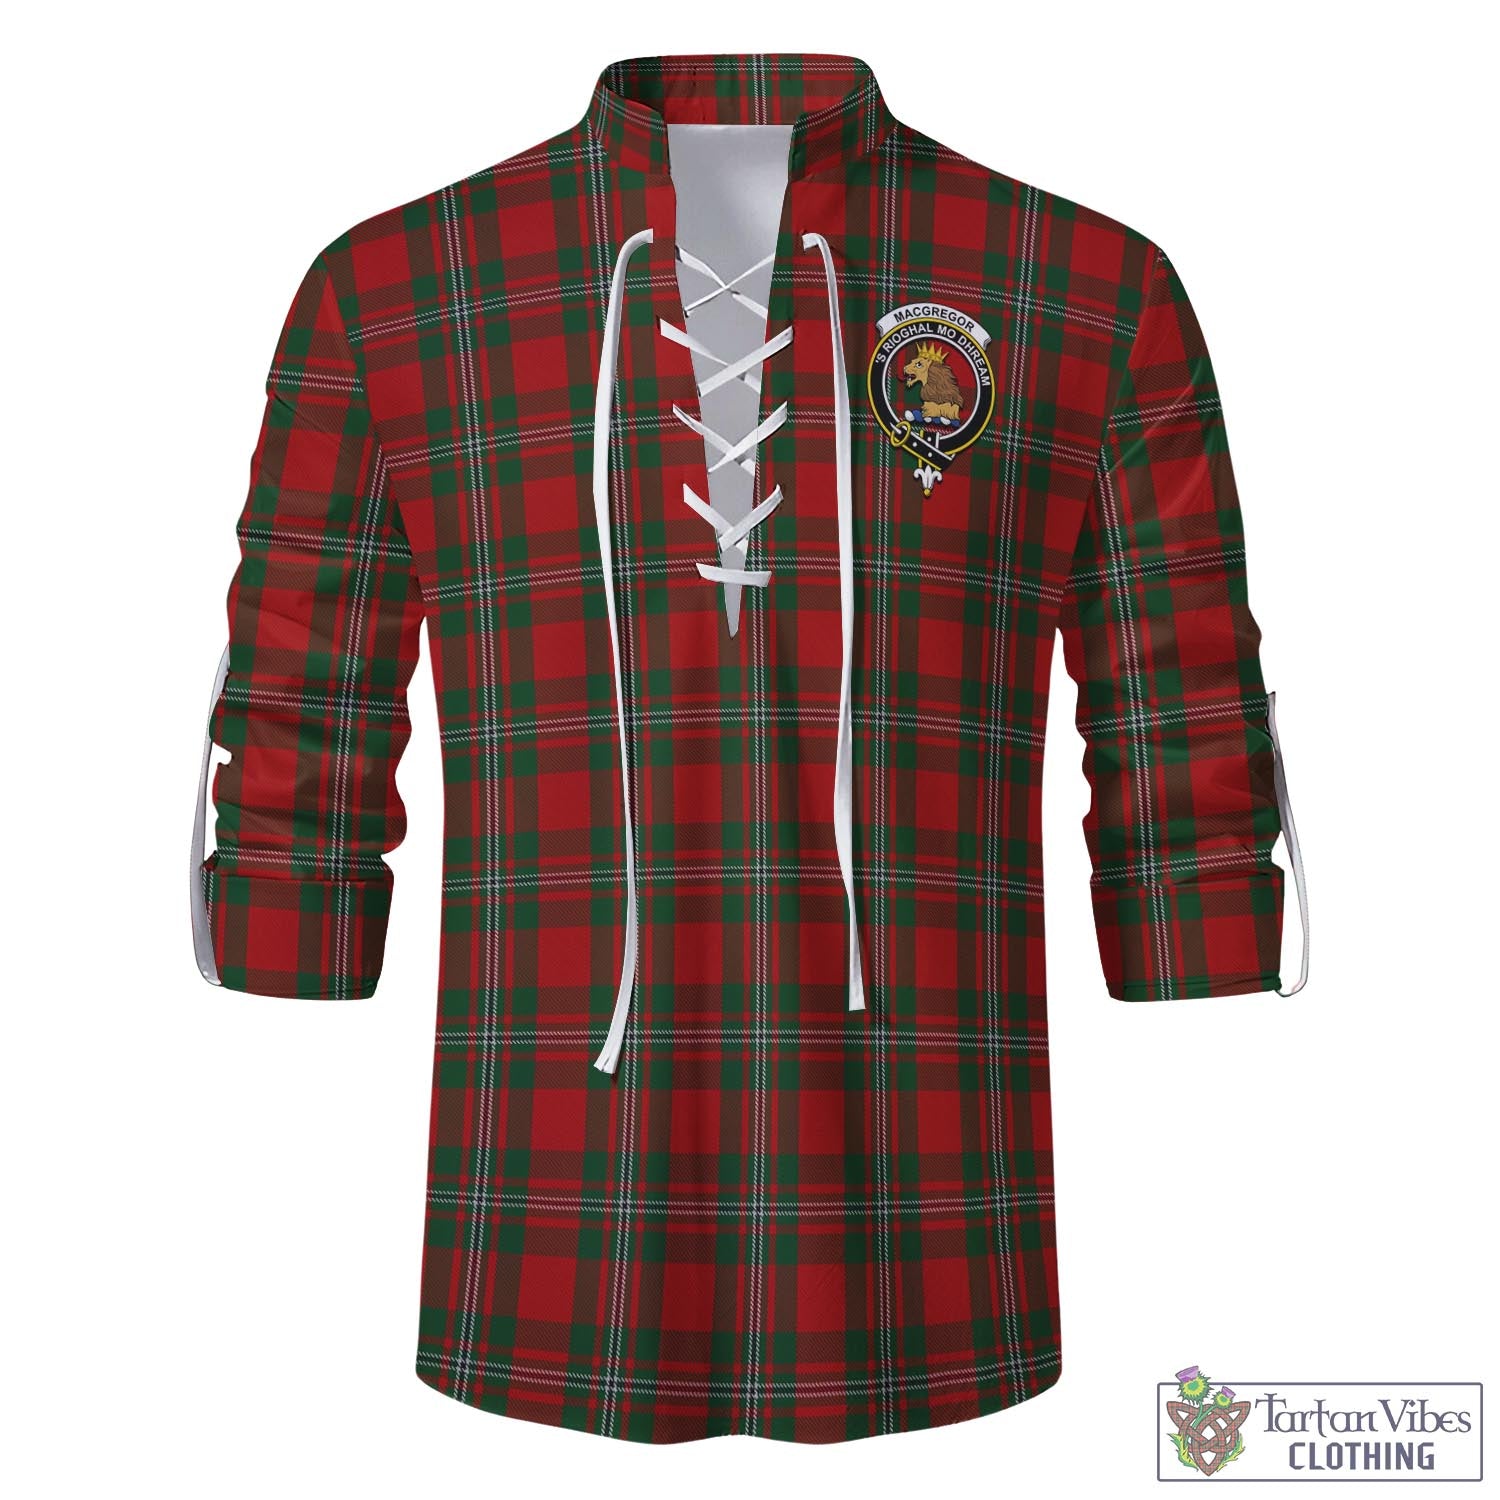 Tartan Vibes Clothing MacGregor Tartan Men's Scottish Traditional Jacobite Ghillie Kilt Shirt with Family Crest